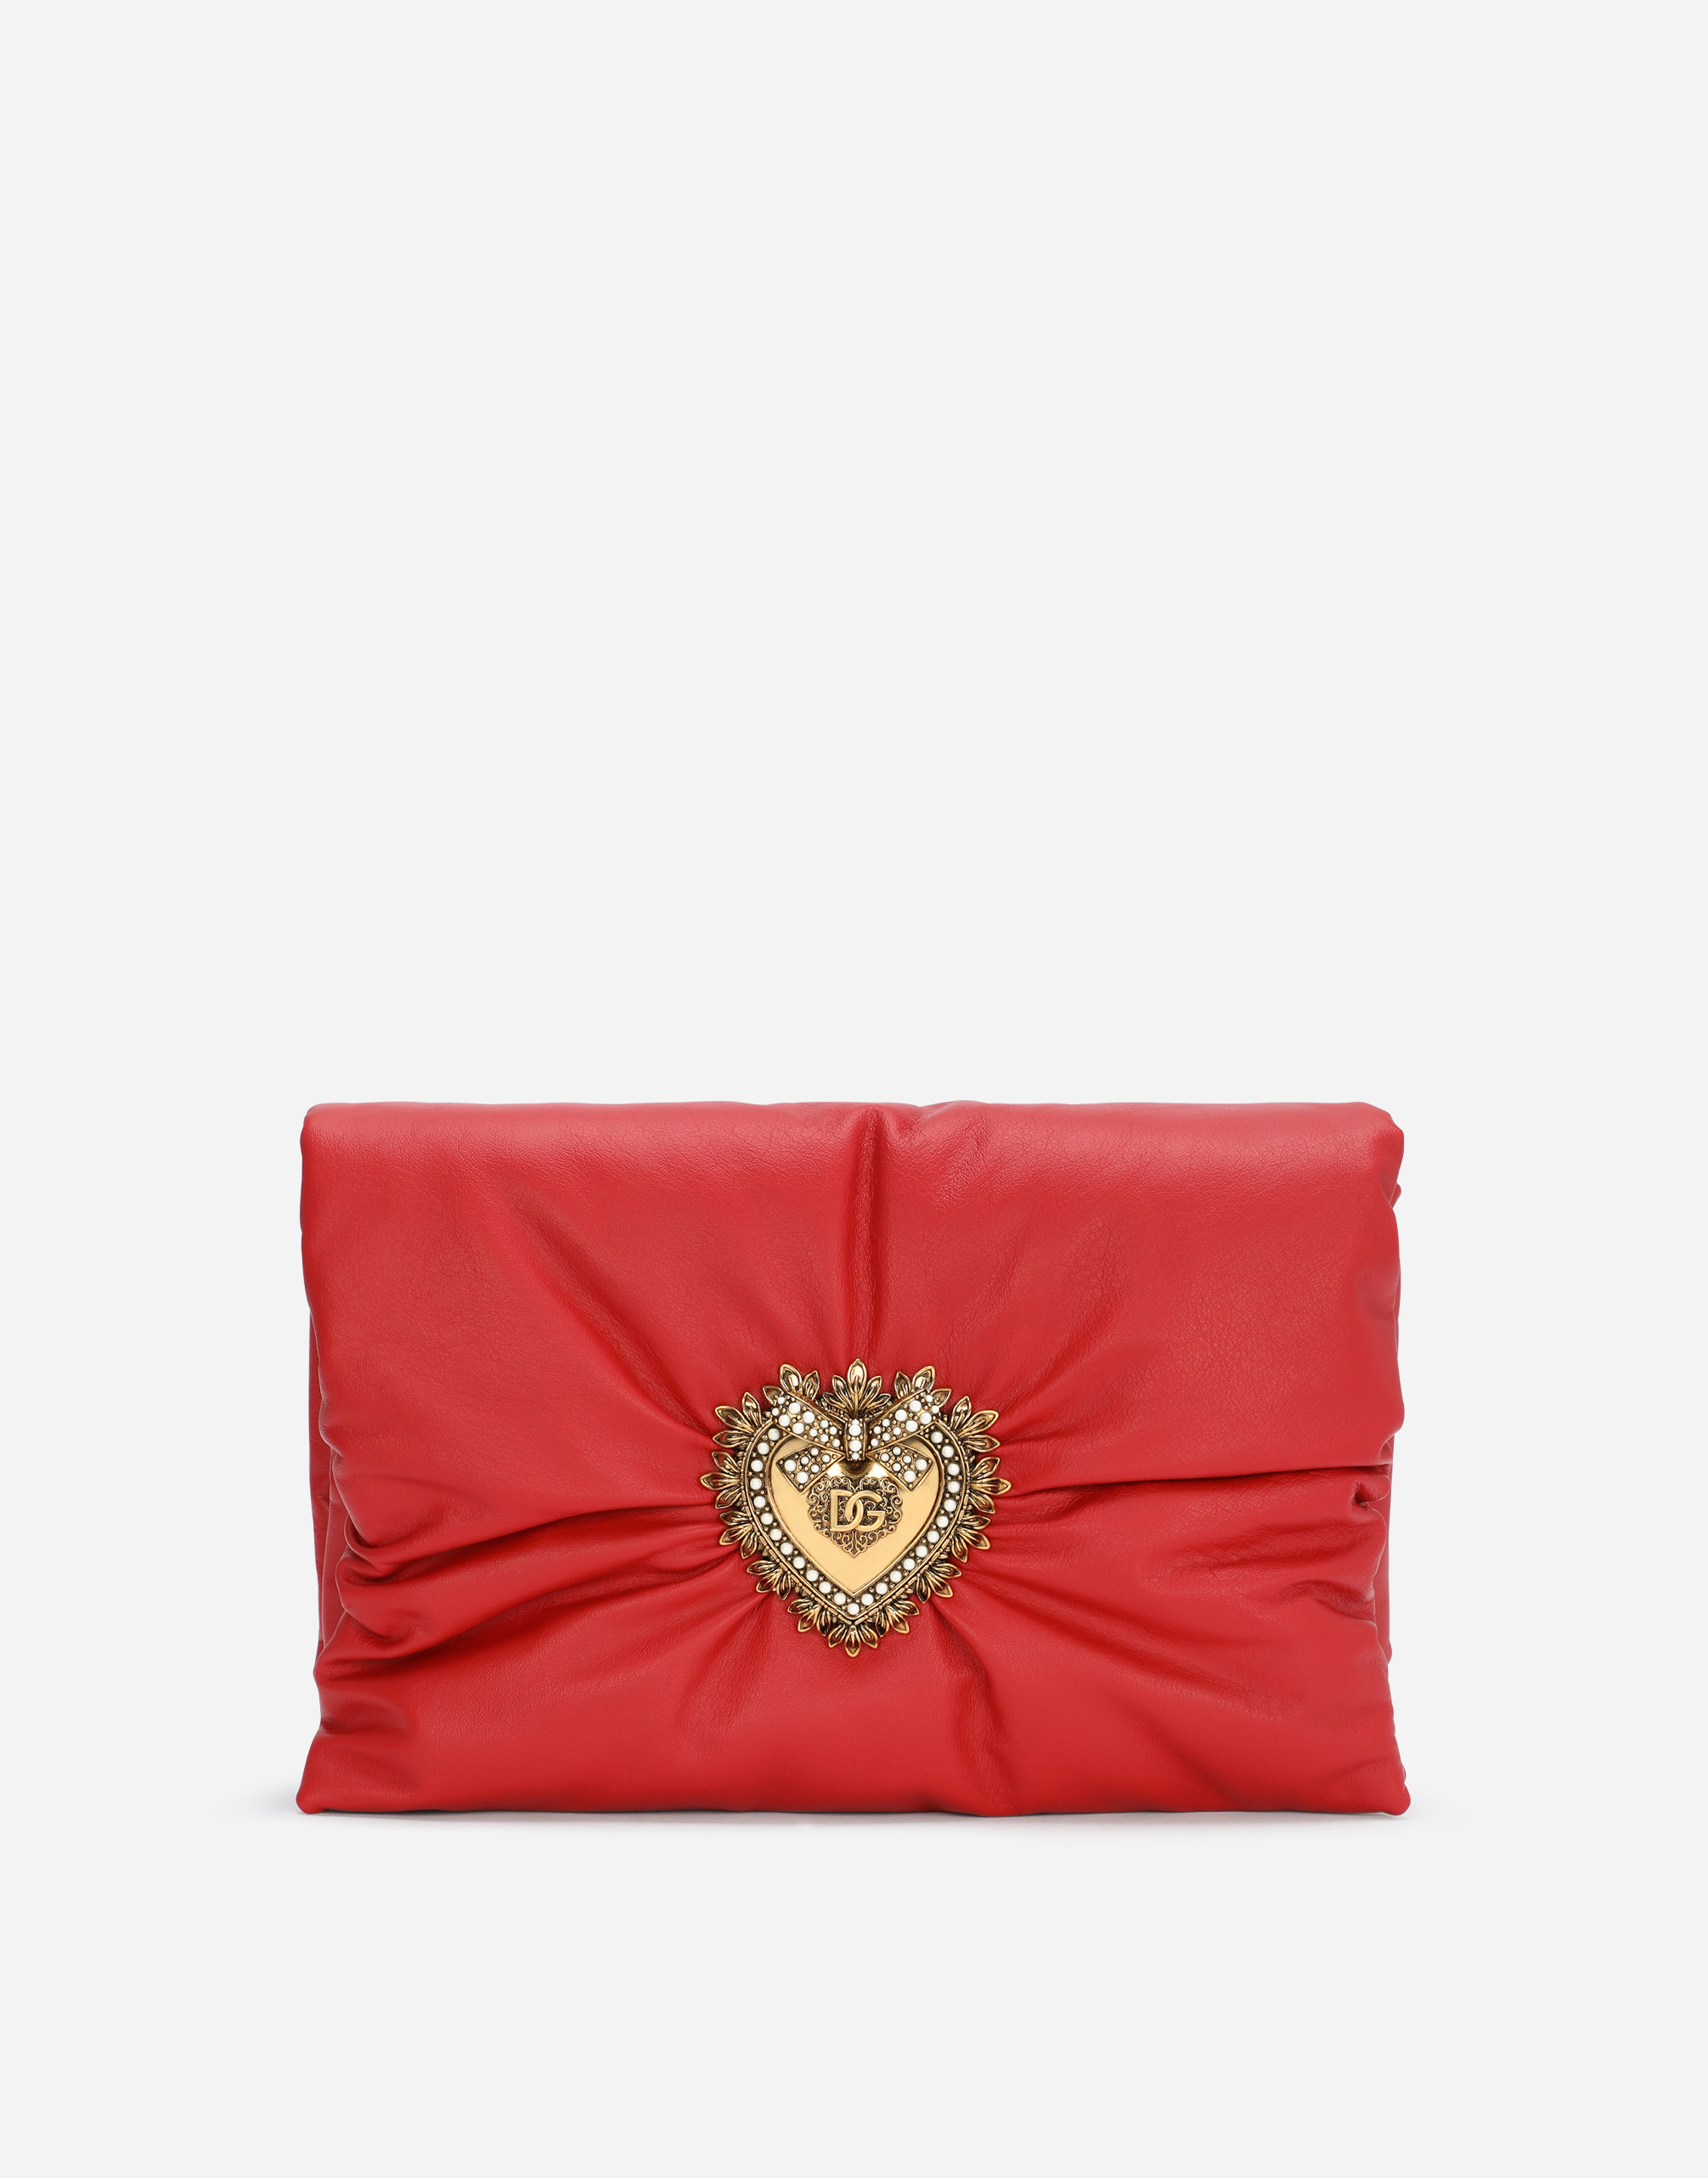 Dolce & Gabbana Medium Calfskin Devotion Soft Bag In Red